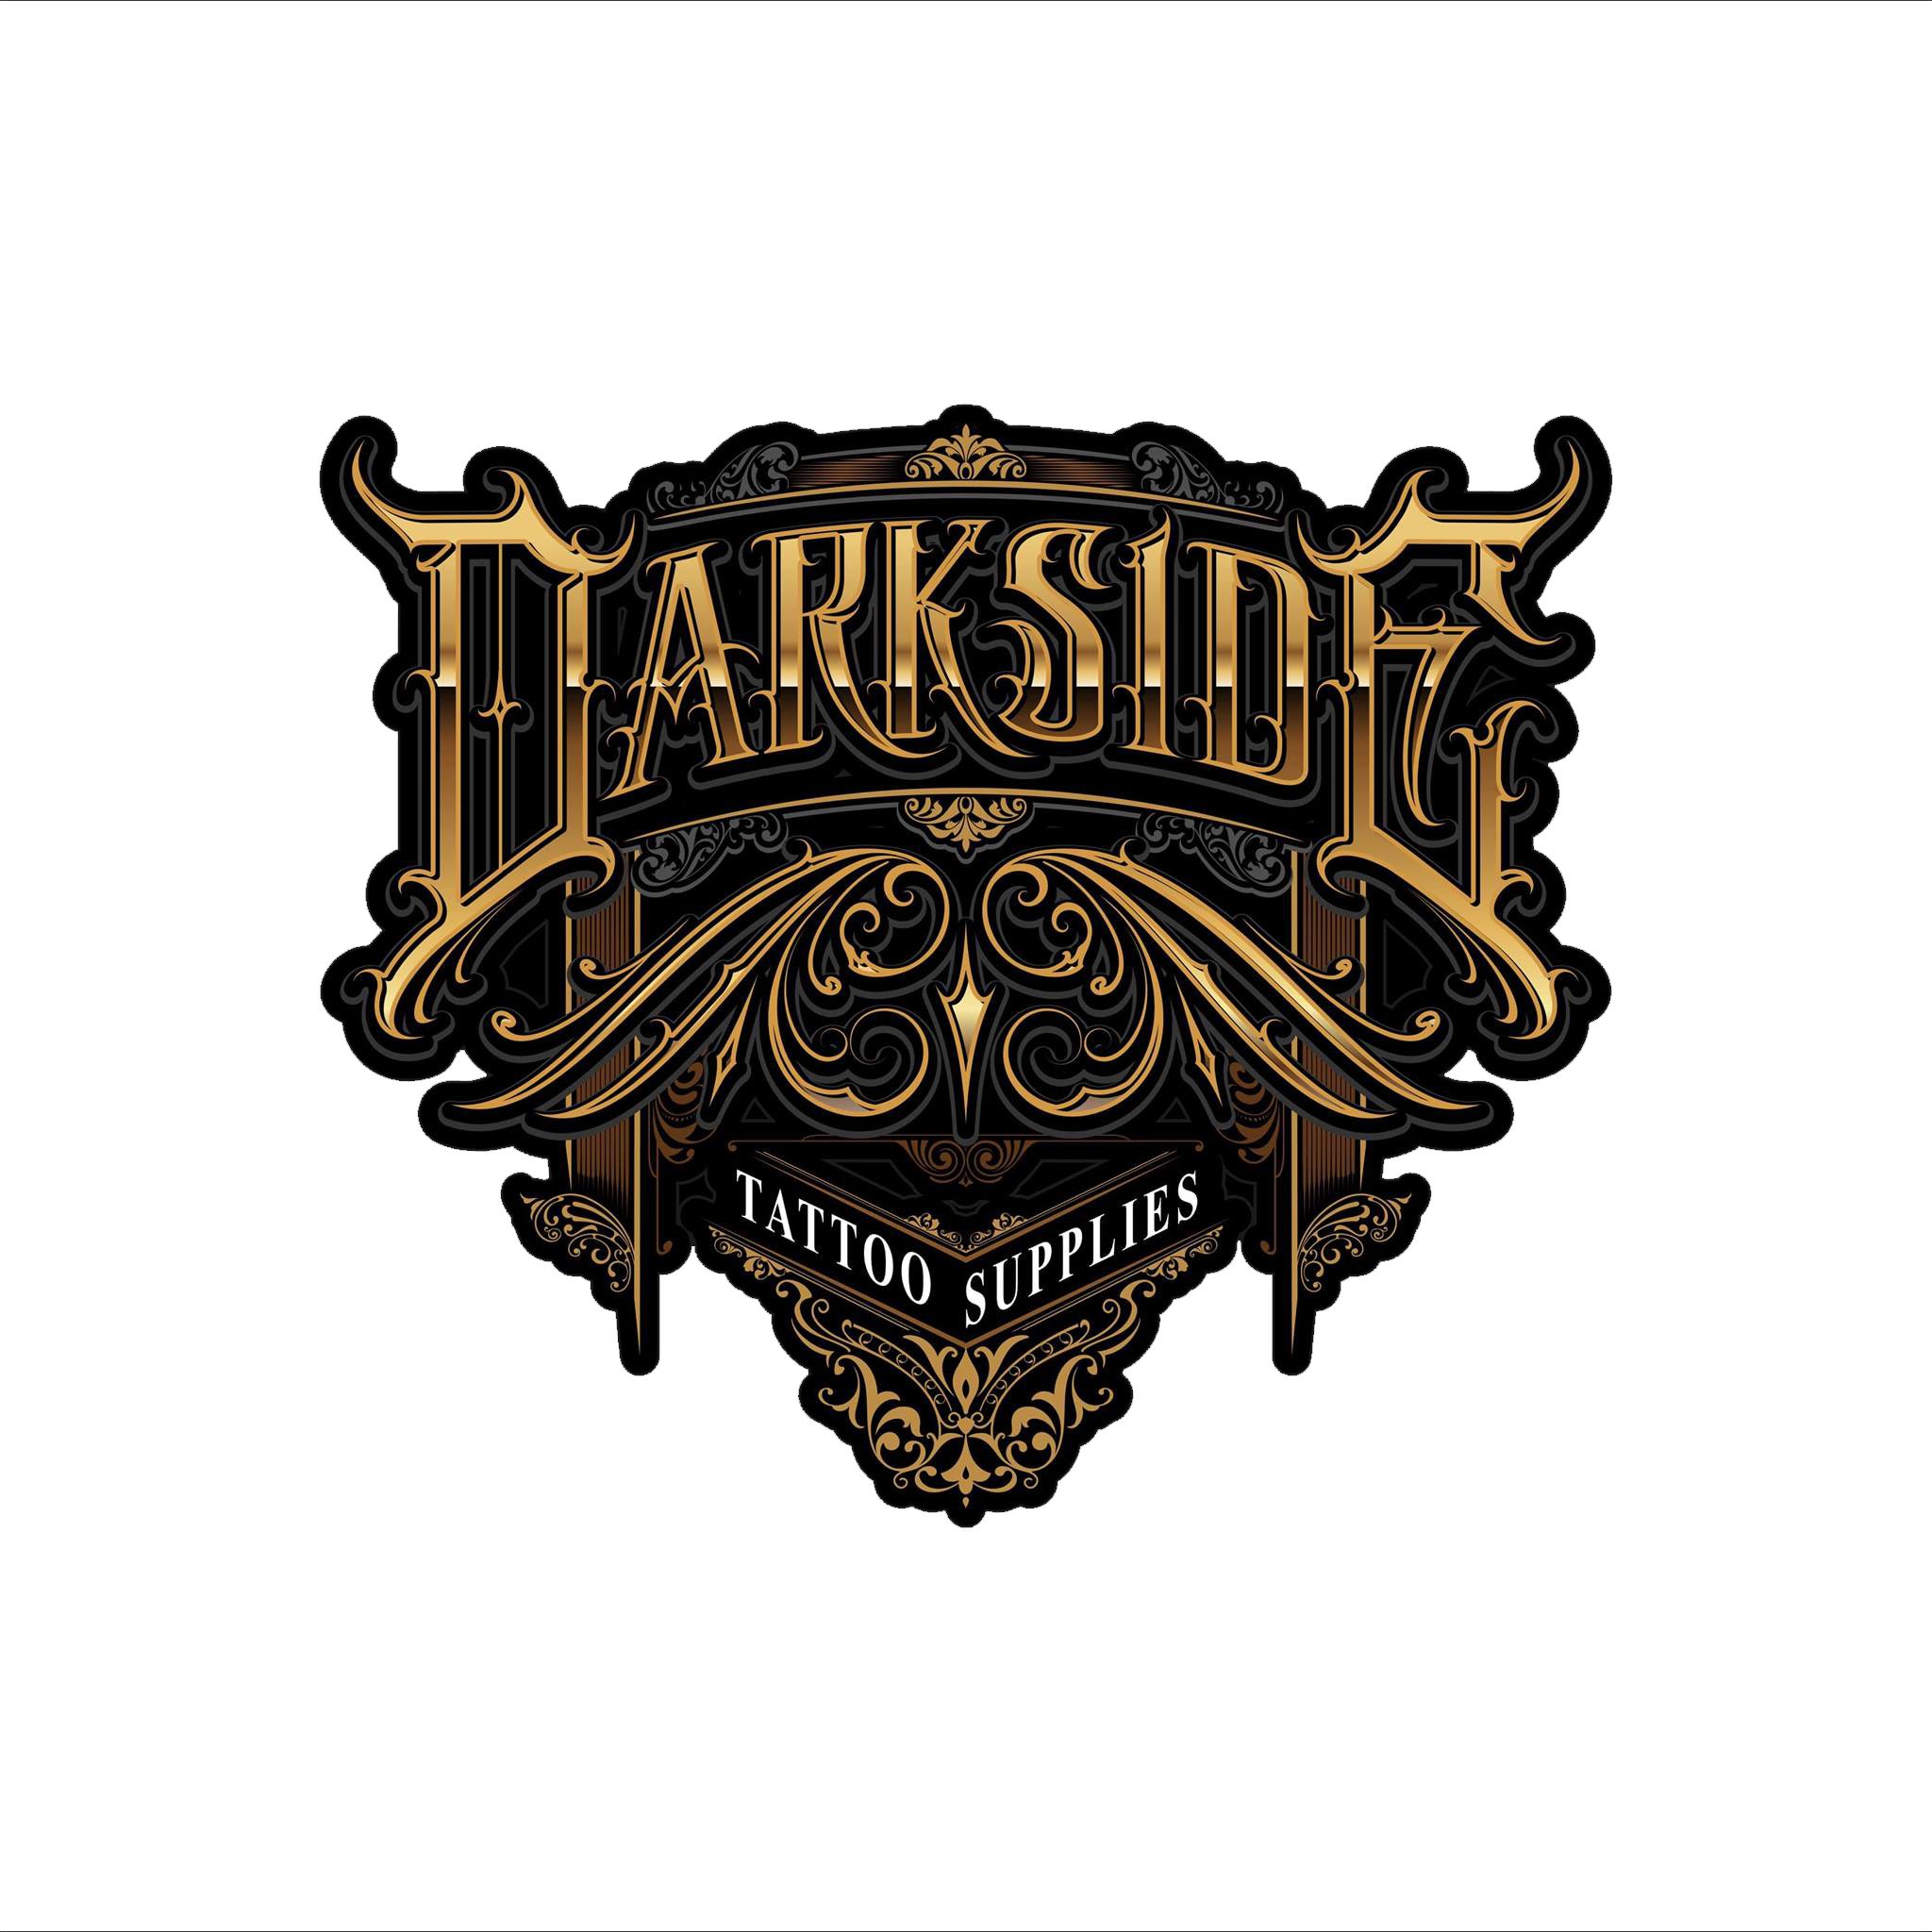 dark side tattoo supplies_SB_website.jpg